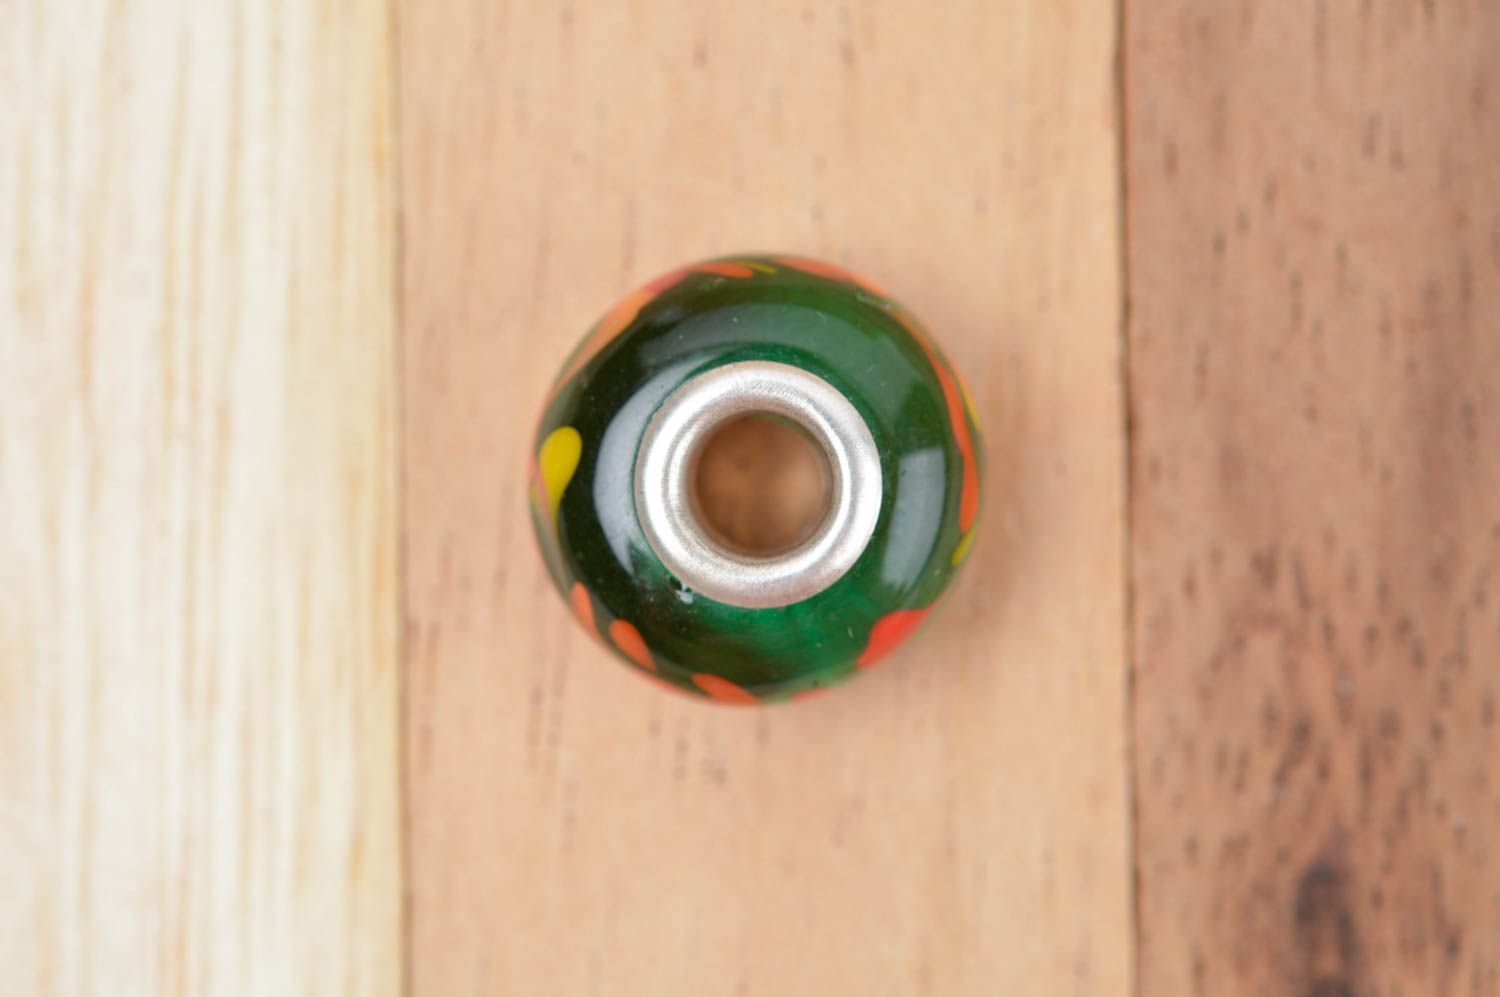 Cuenta artesanal de cristal verde fornitura para manualidades souvenir original foto 3